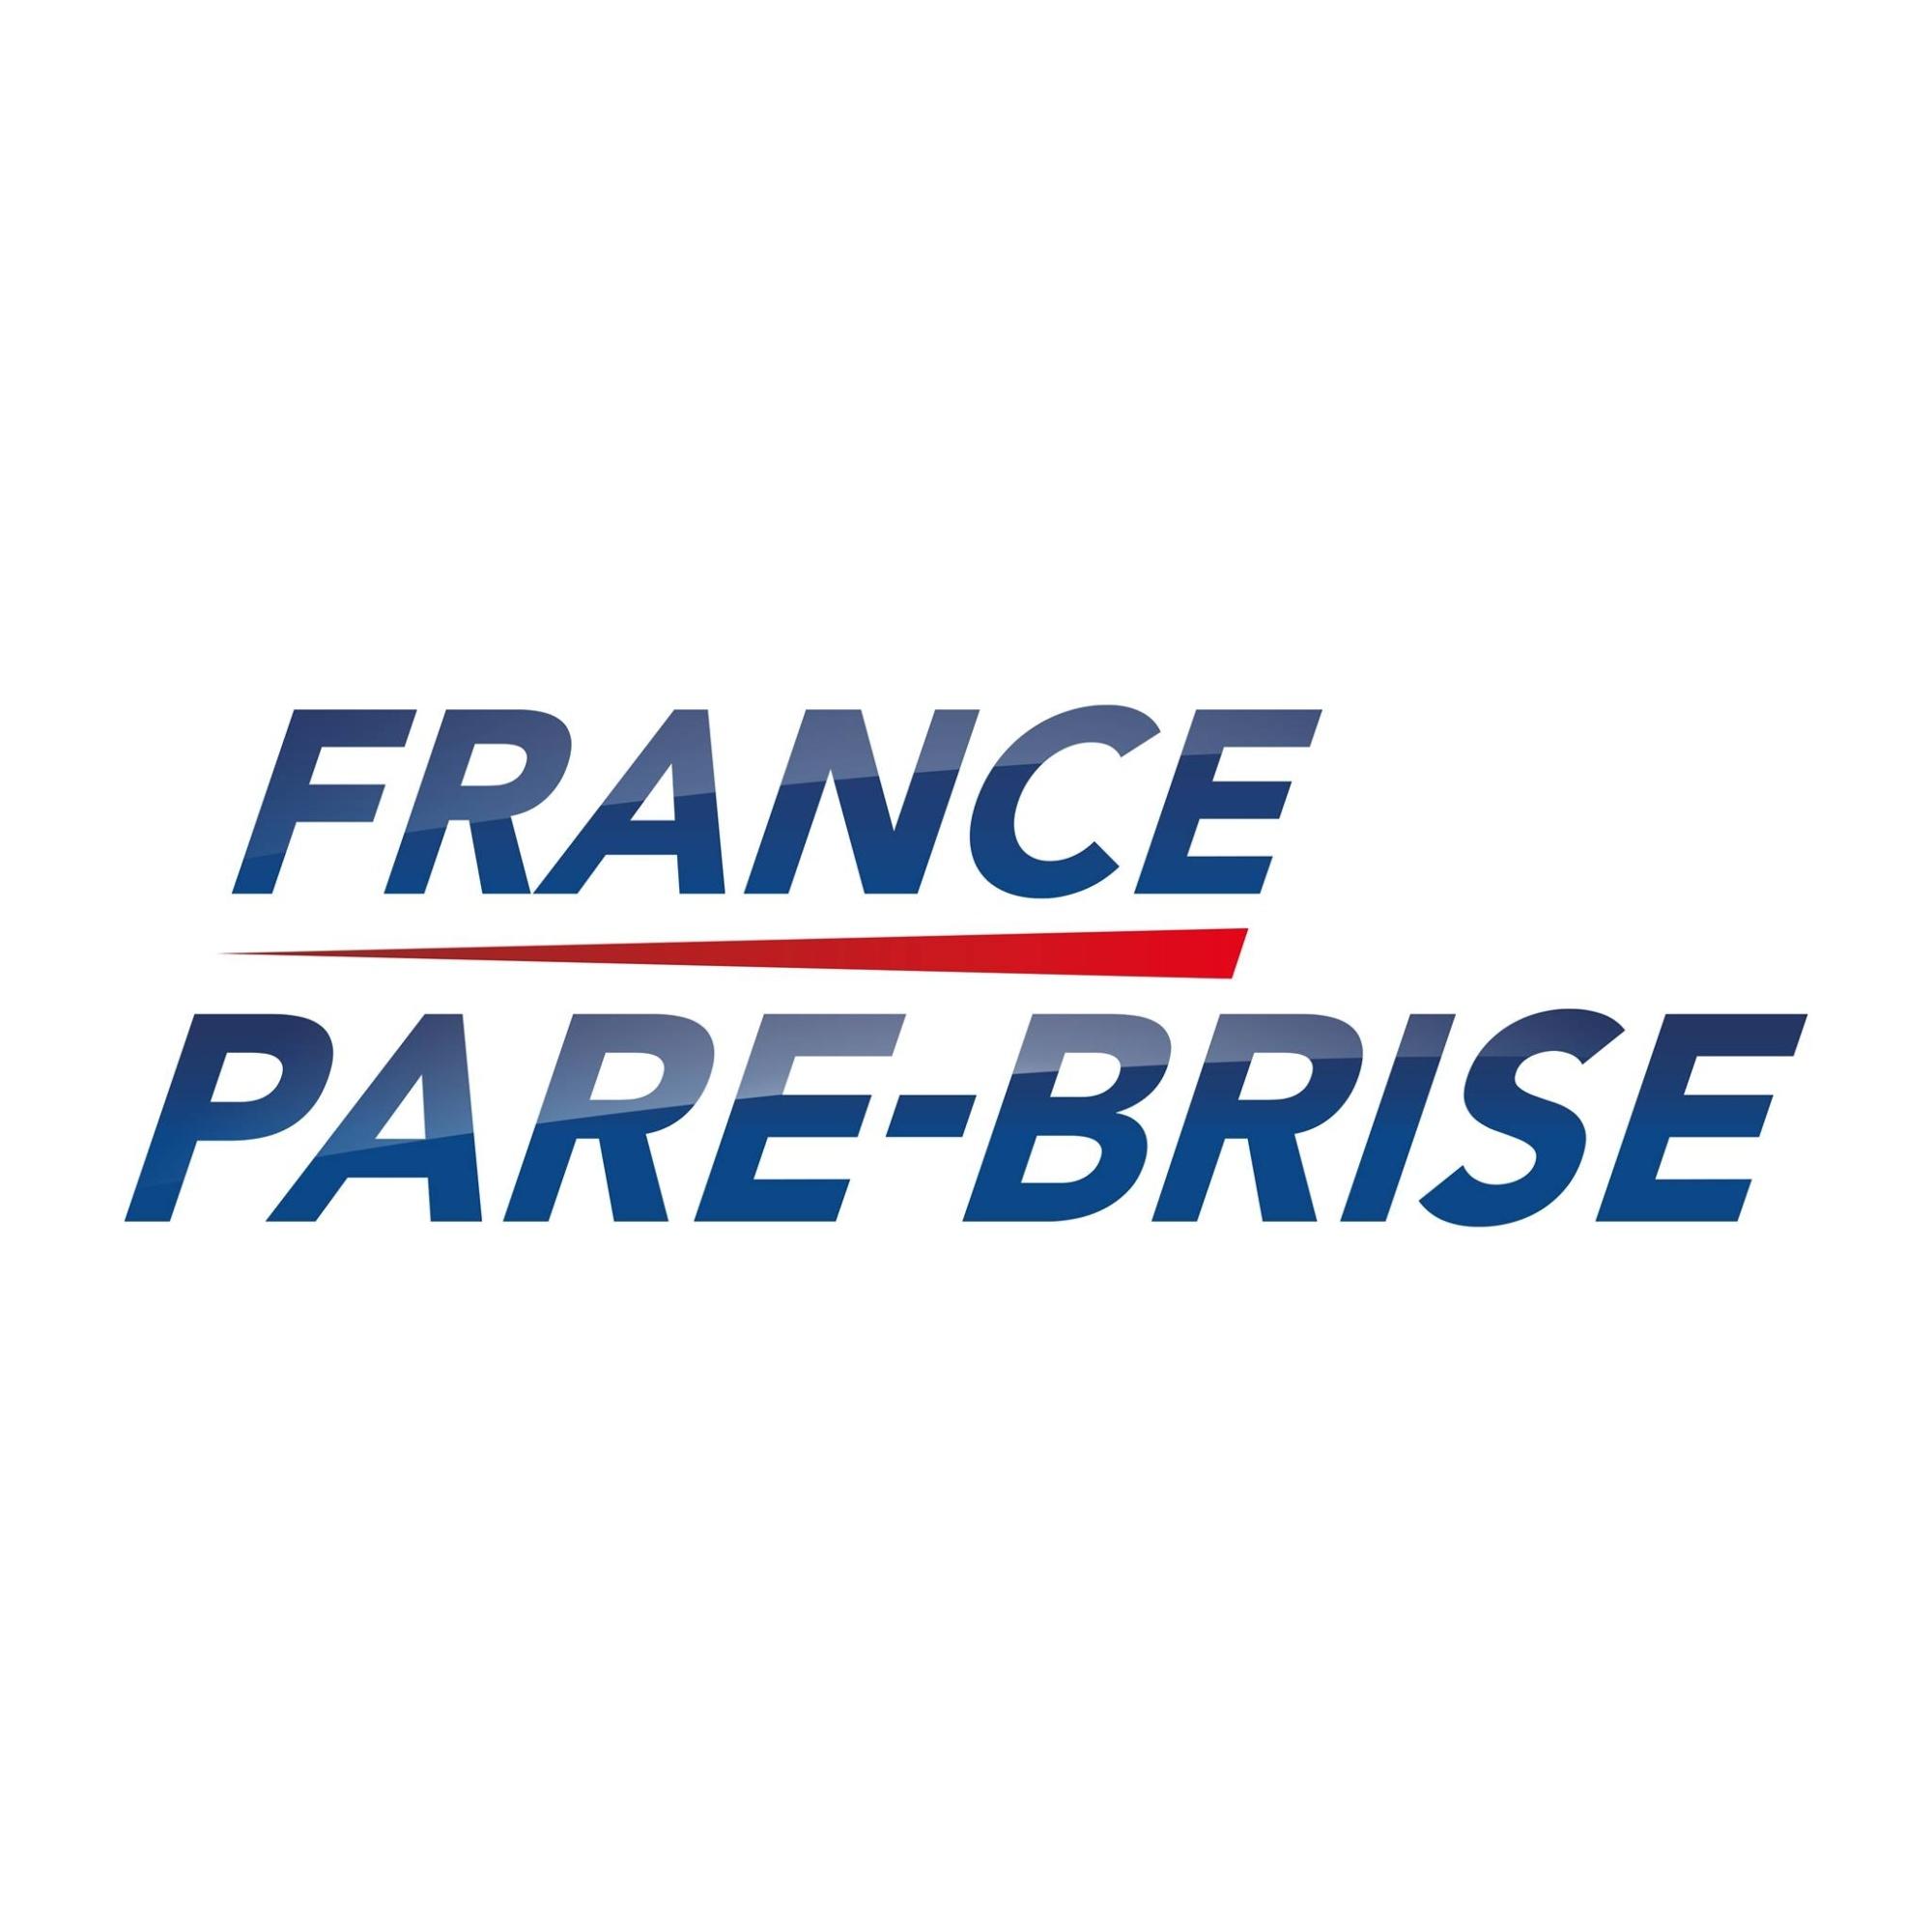 France Pare-brise Romorantin Lanthenay